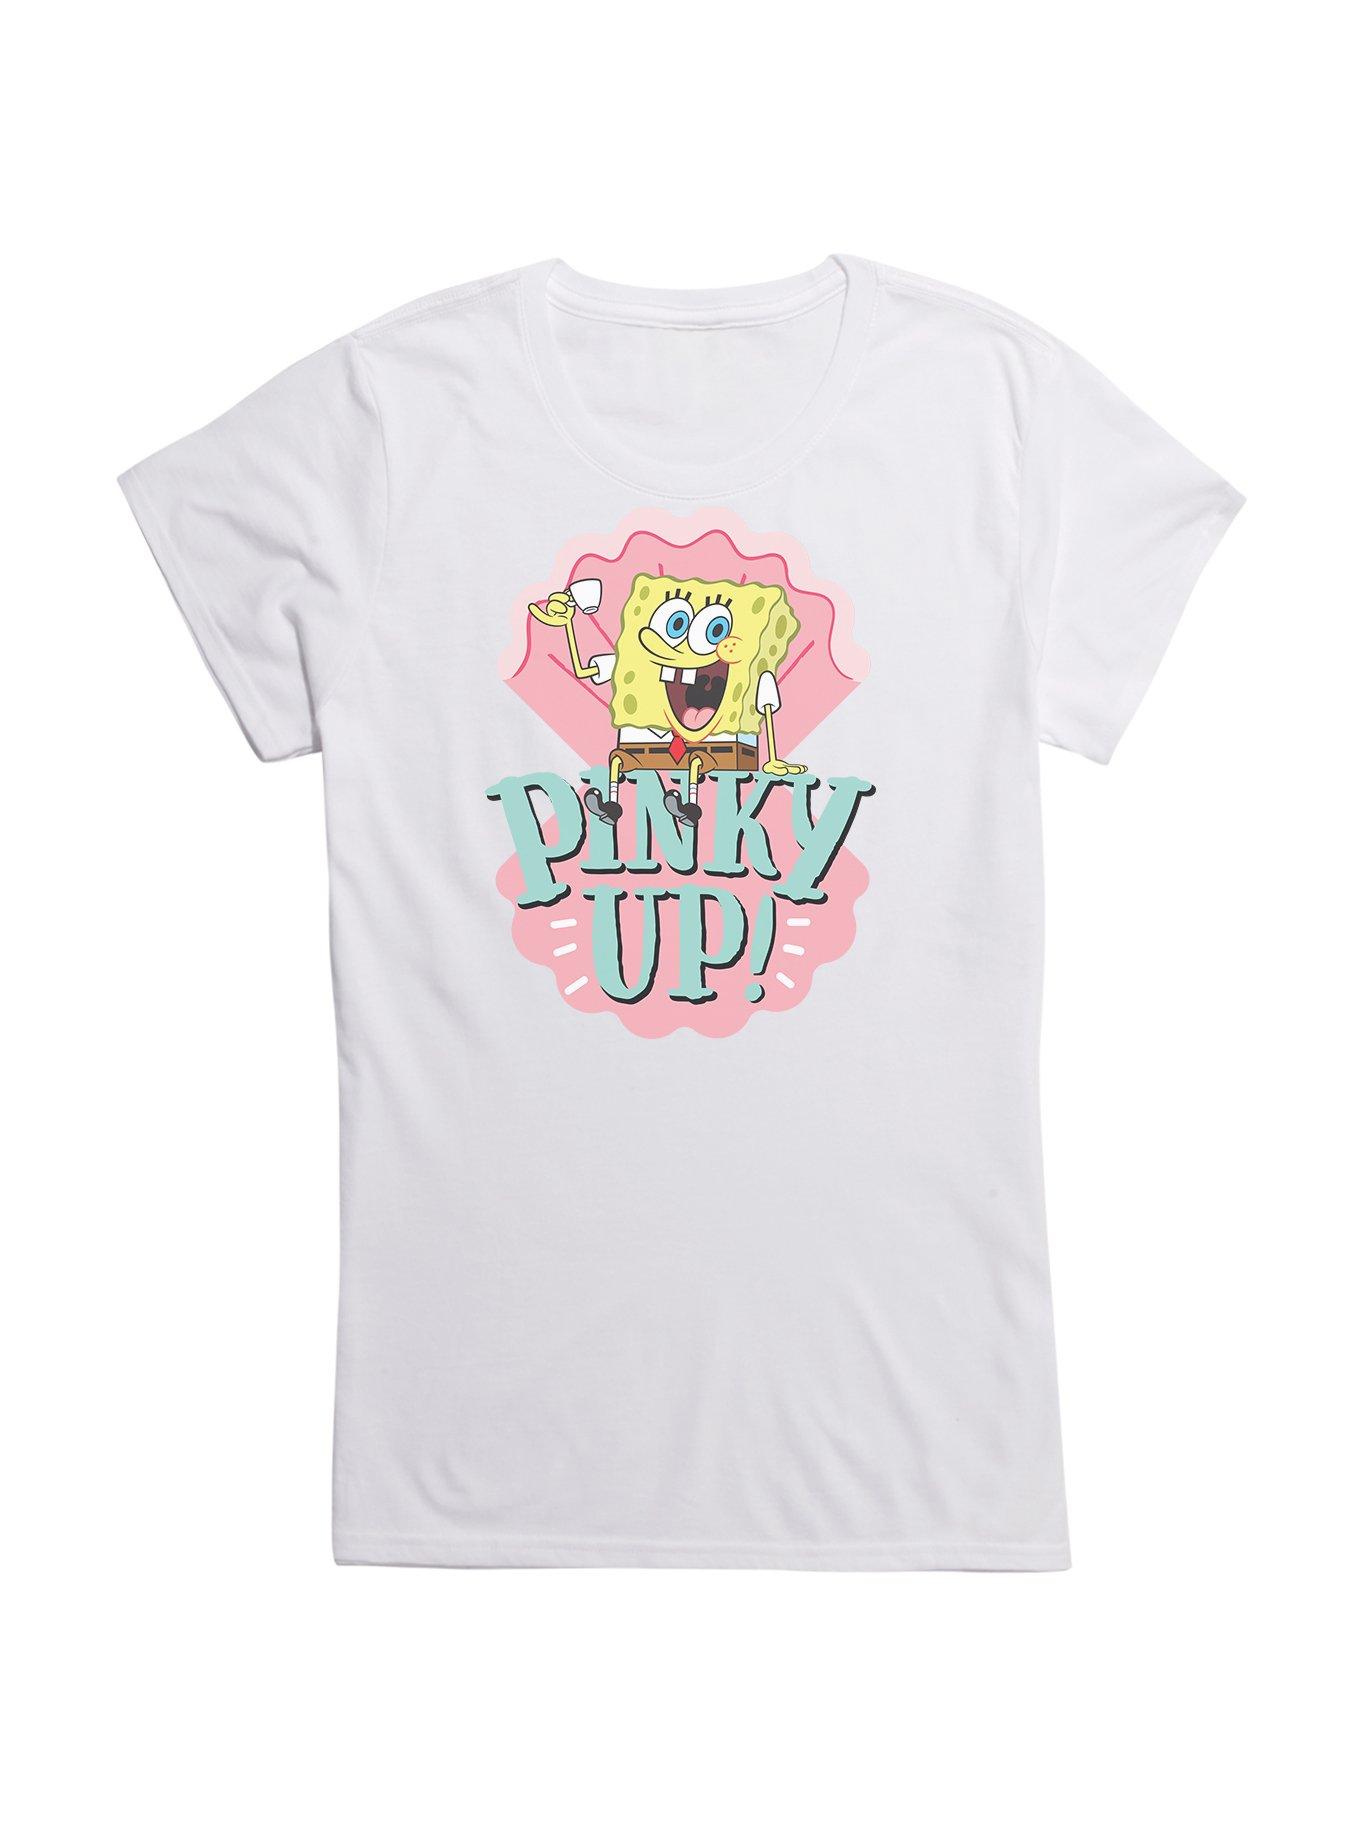 Spongebob Squarepants Pinky Up Girls T-Shirt | Hot Topic